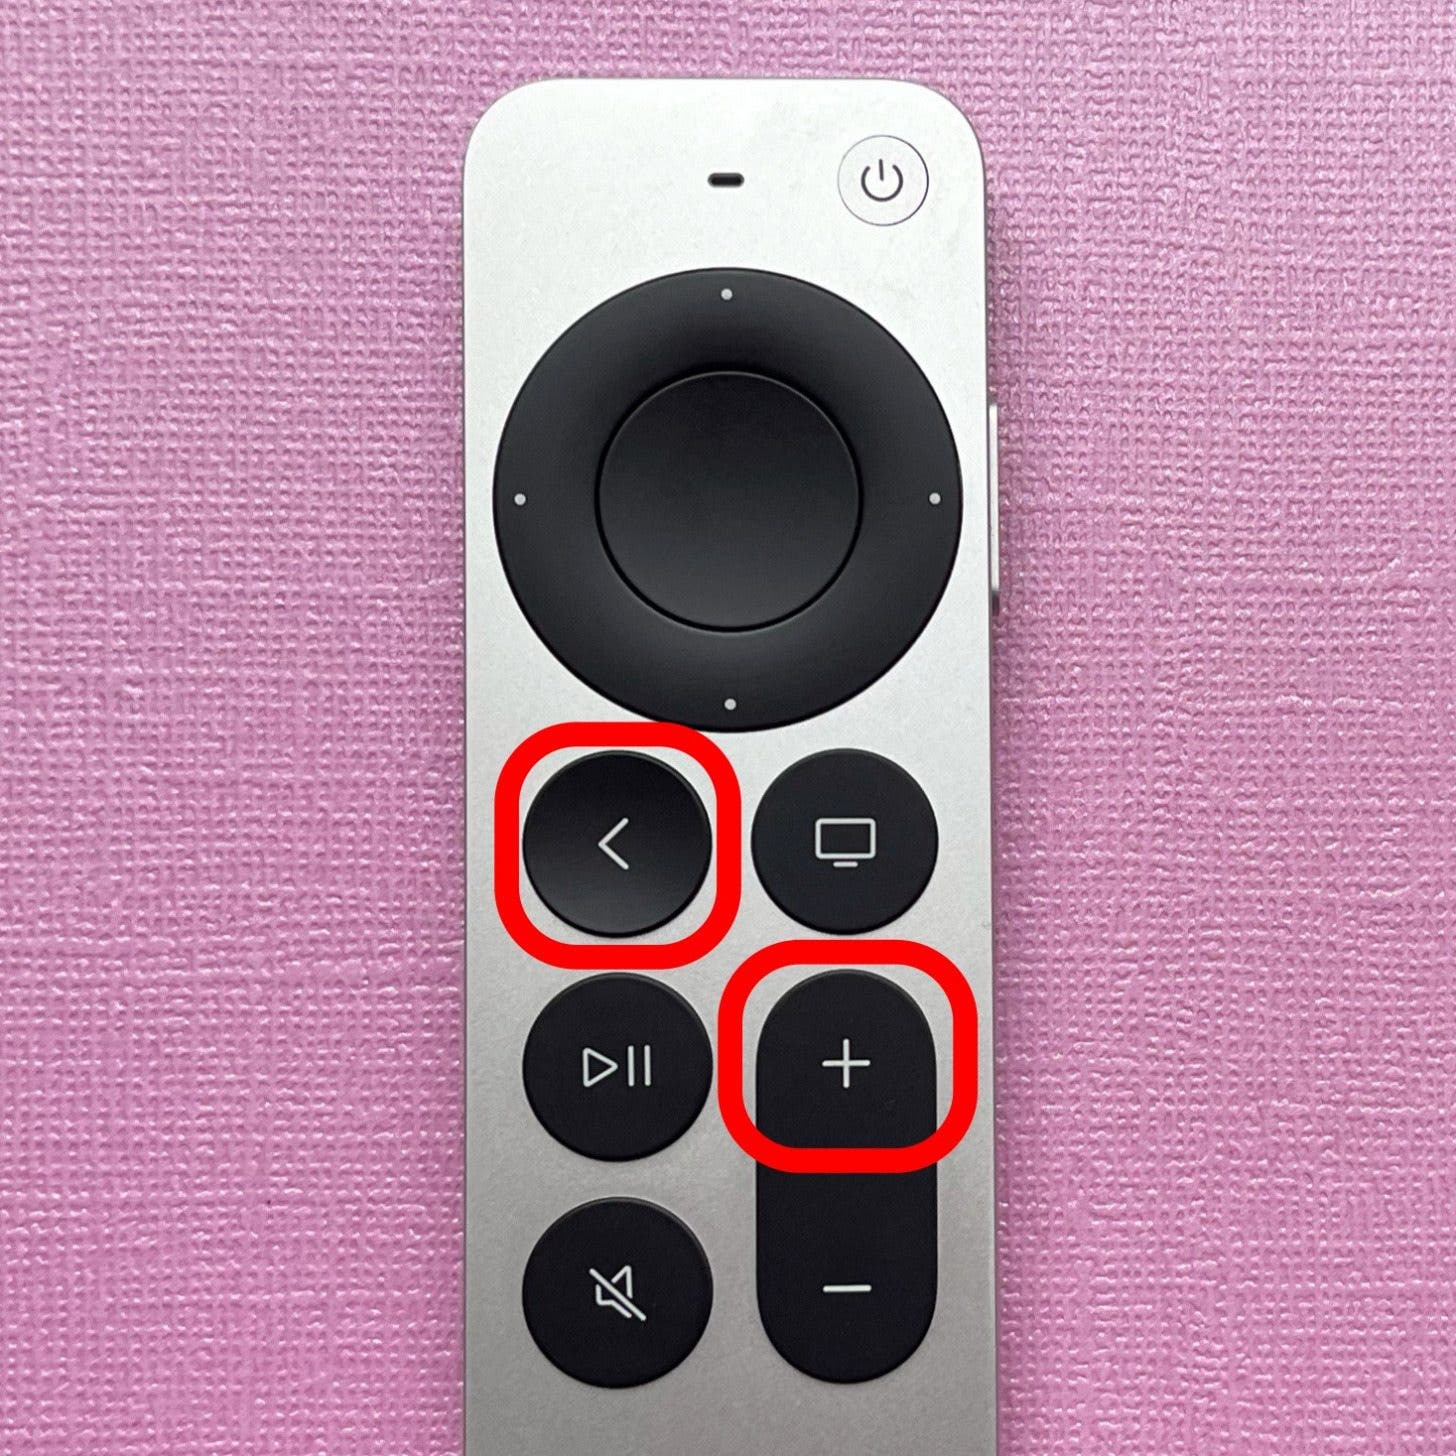 Ejeren Gutter Agurk Fixed: Apple TV Remote Not Working